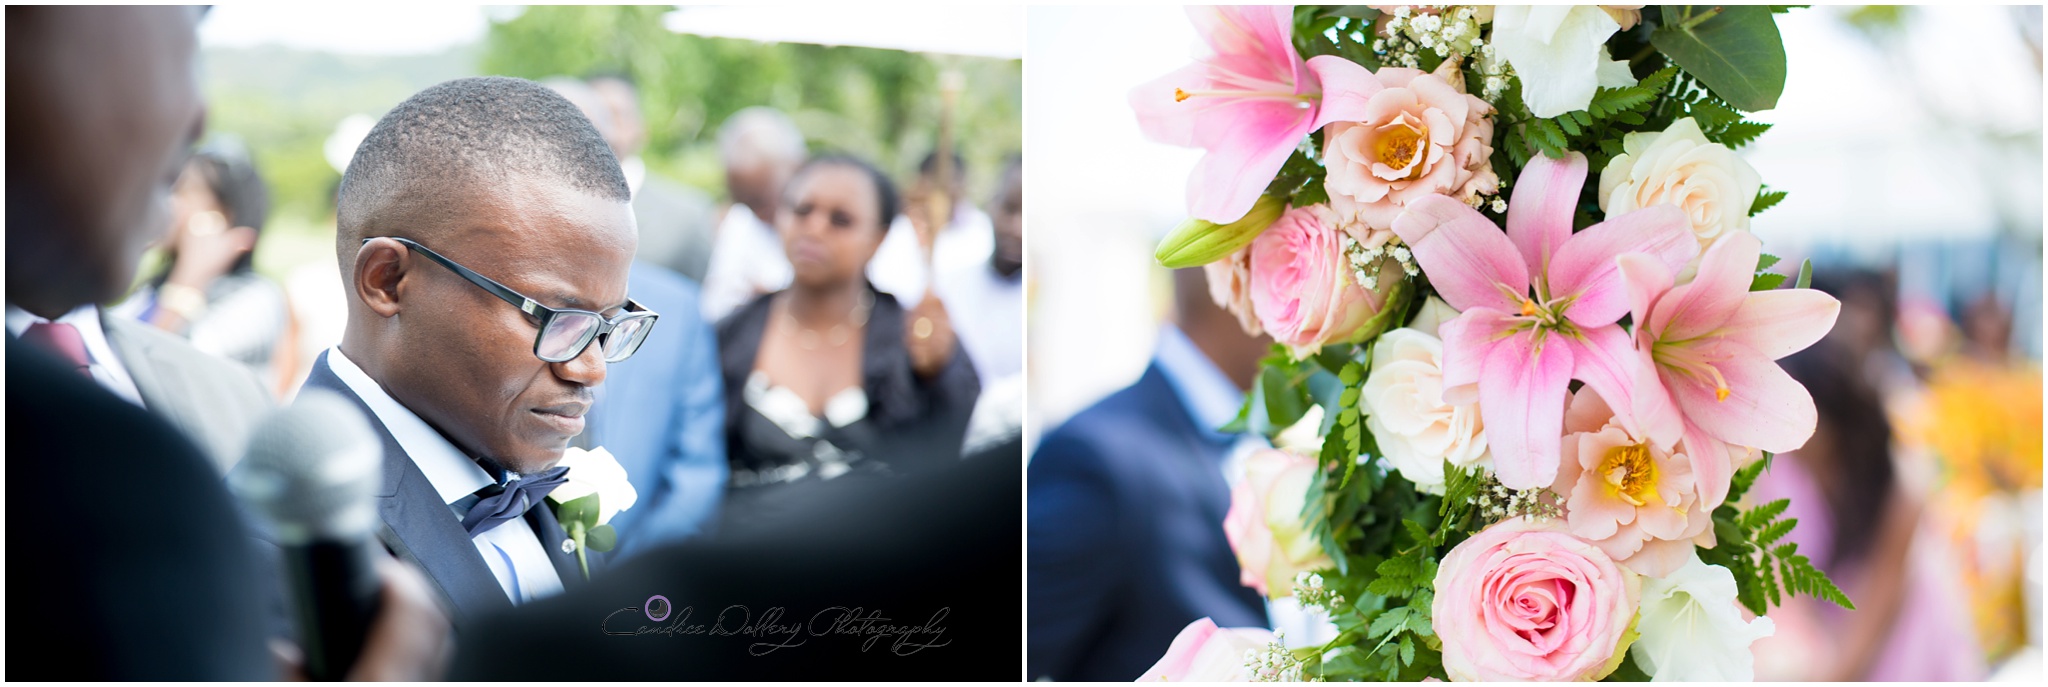 Reuben & Antoinette's Wedding - Candice Dollery Photography_7865